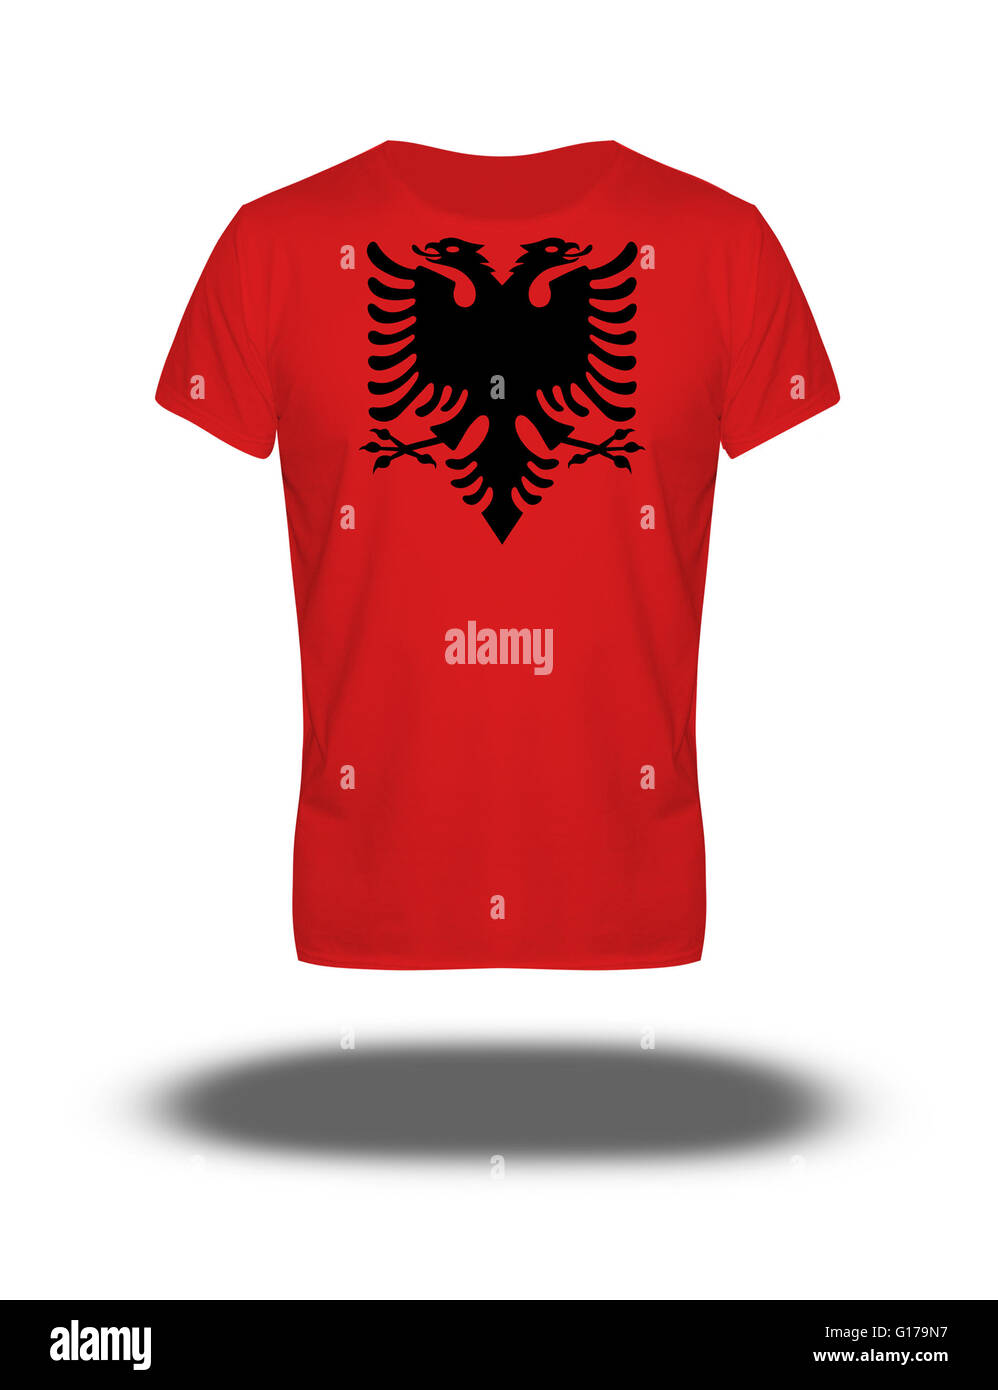 Albania flag t-shirt on white background with shadow Stock Photo